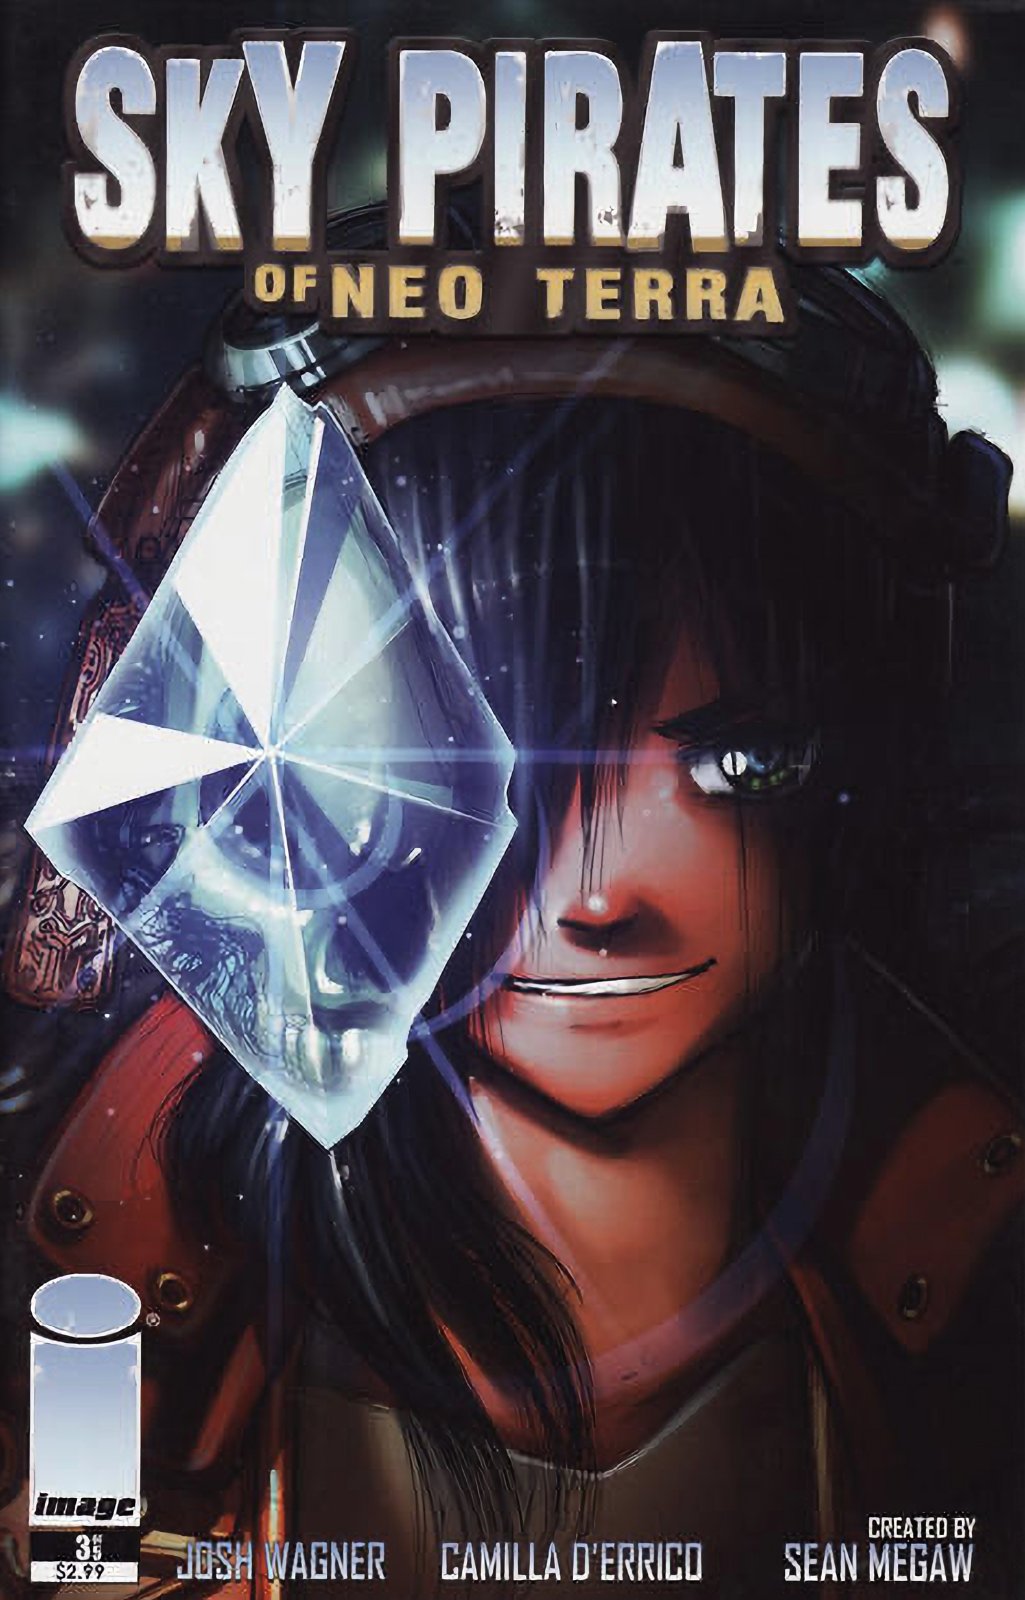 Sky Pirates of Neo Terra #3 (2009-2010) Image Comics